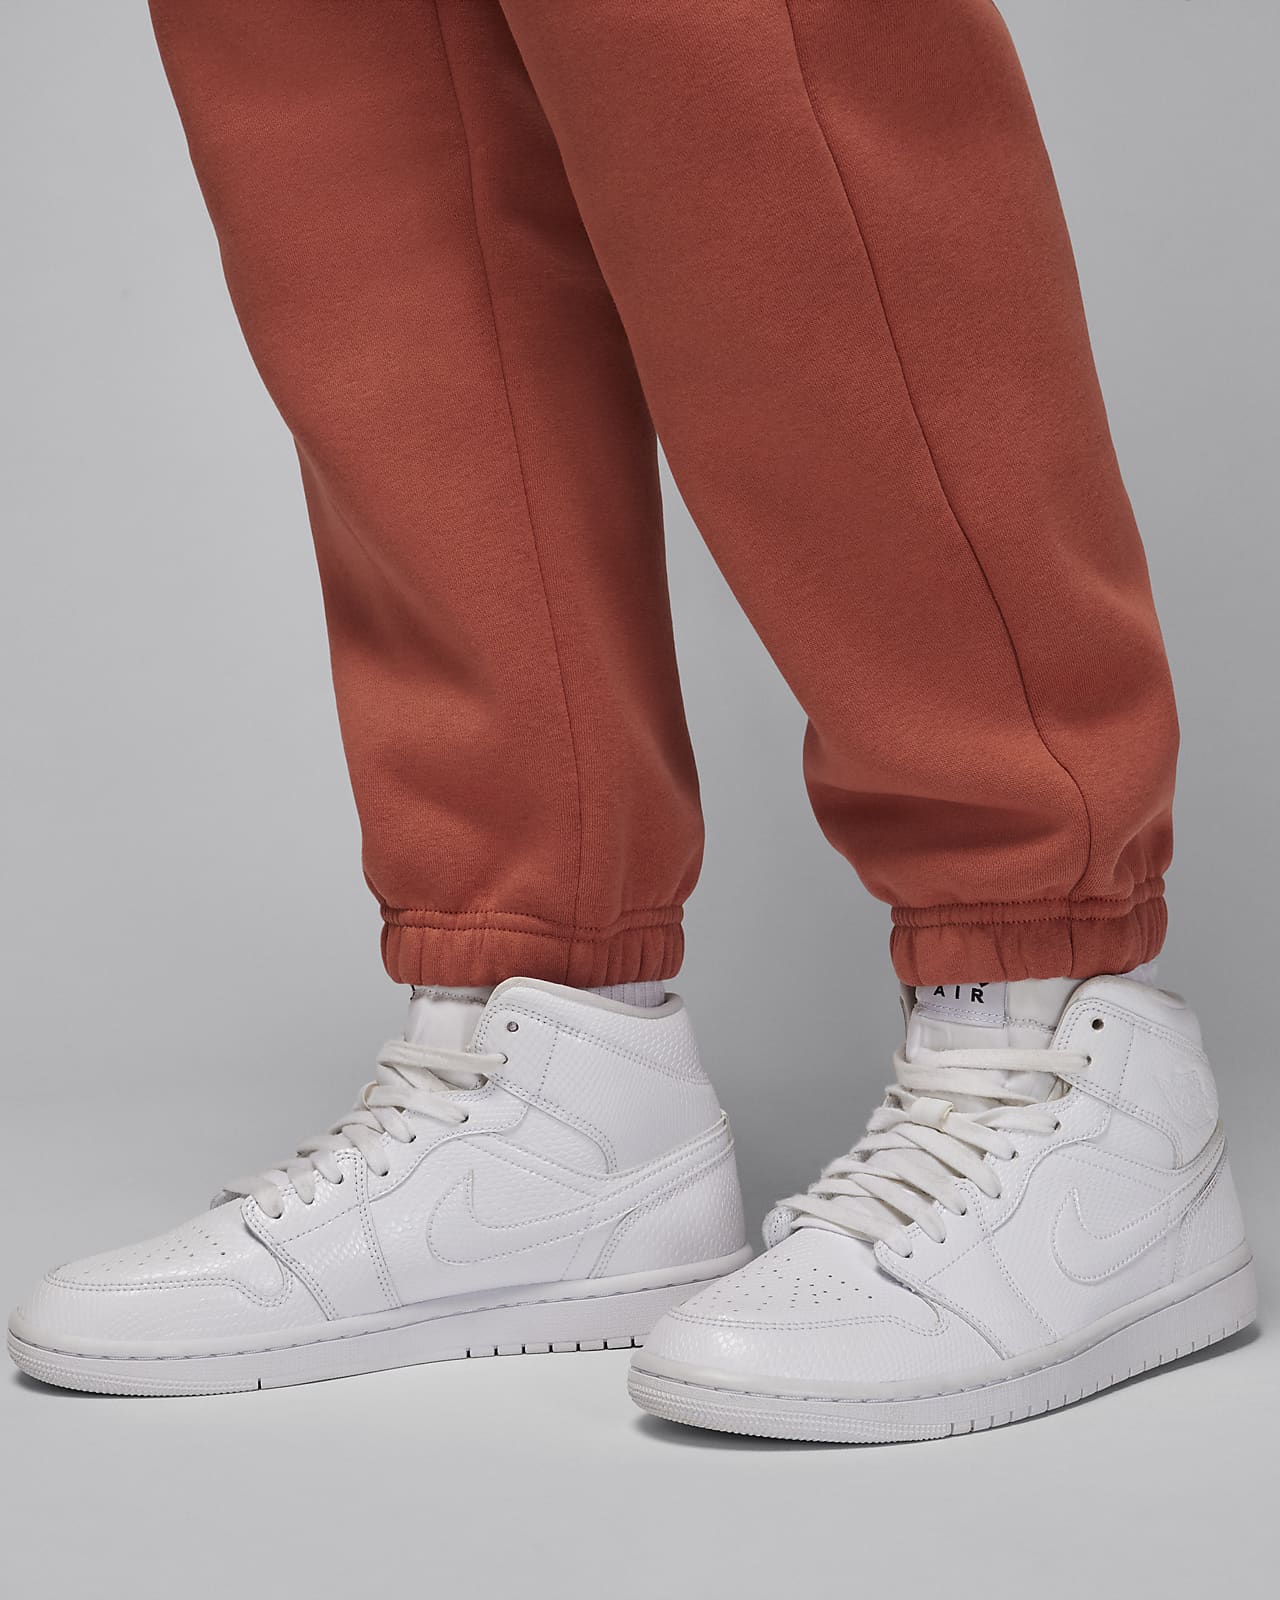 Jordan Brooklyn Fleece Pants – DTLR